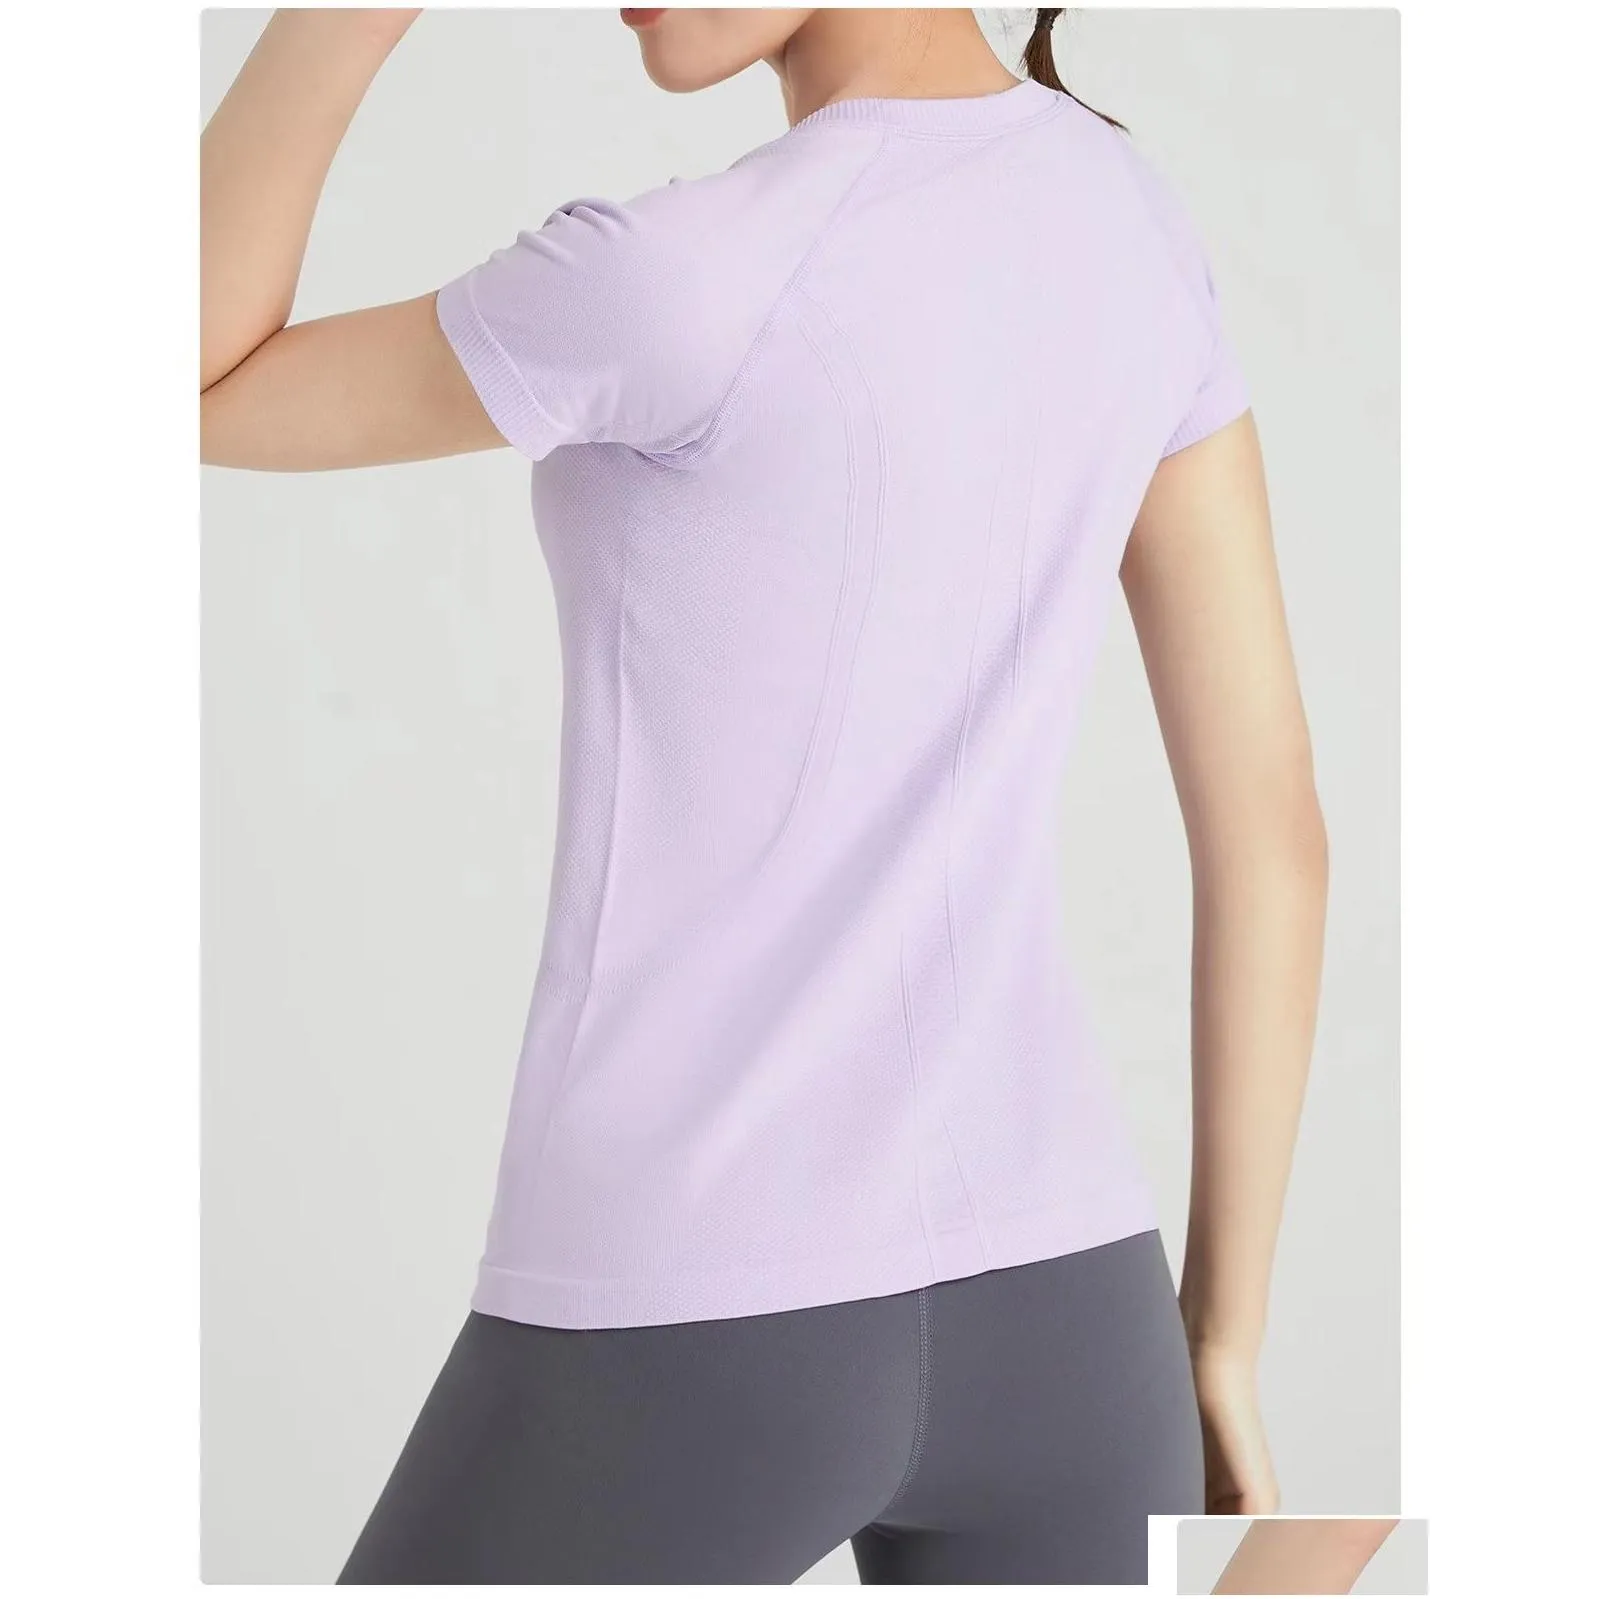 lu tech short sleeve tops and tees t-shirt elastic gym yoga shirts women slim mesh running sport quick dry black fitness sweatshirts